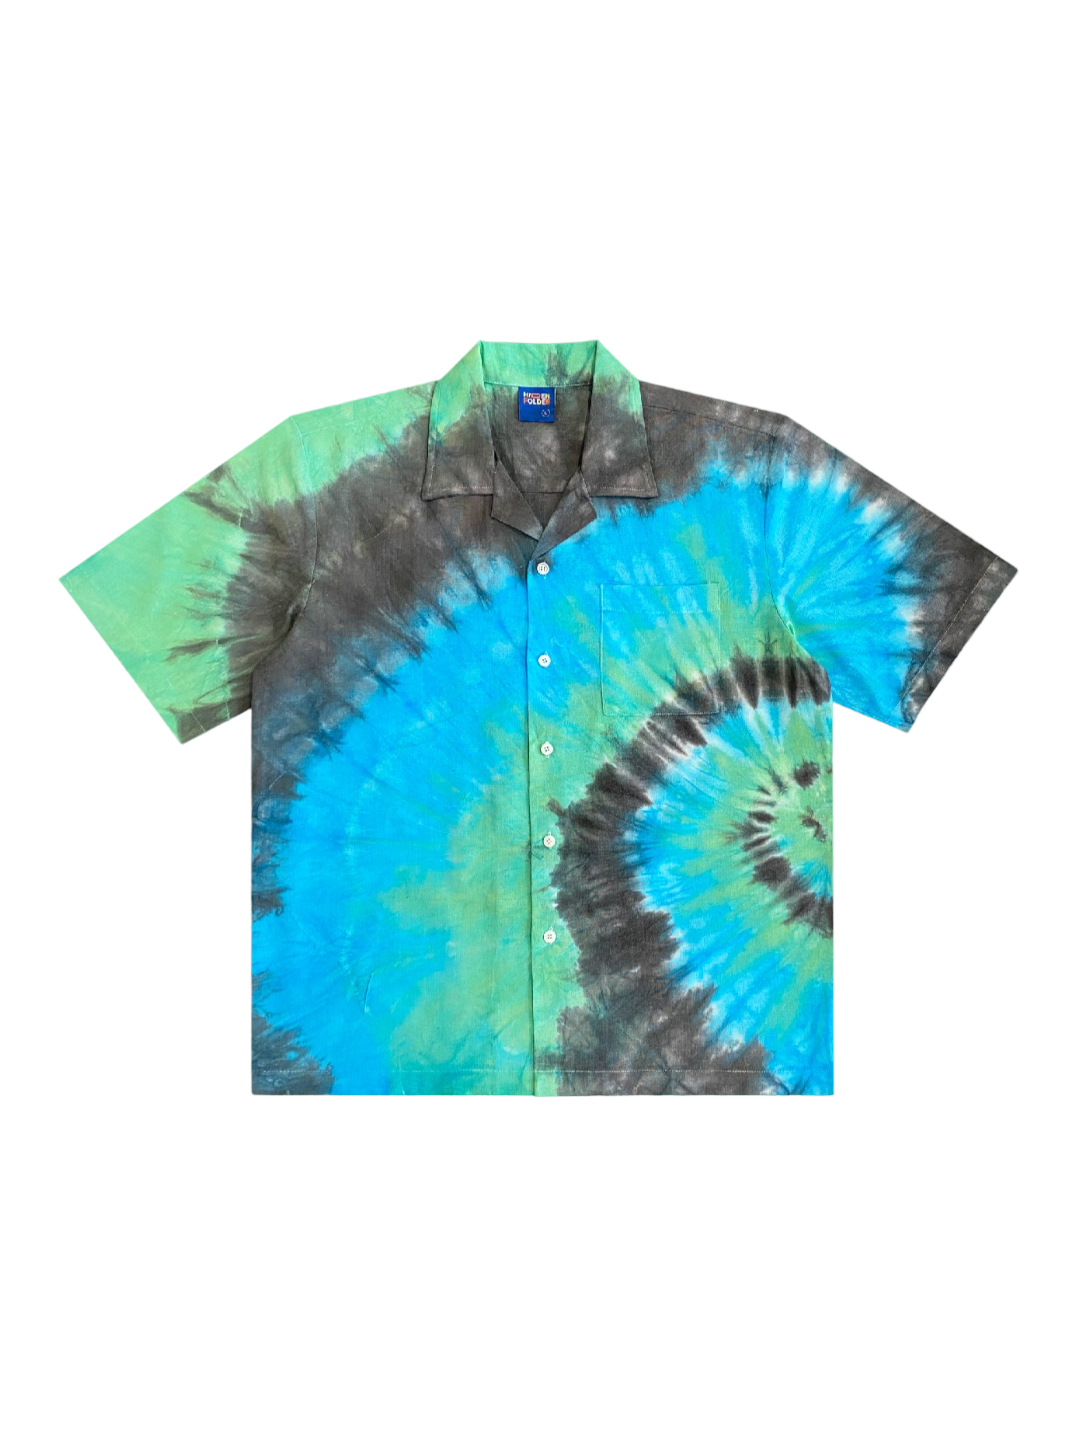 Tie-dye Hawaii Shirt : Peacock feathers